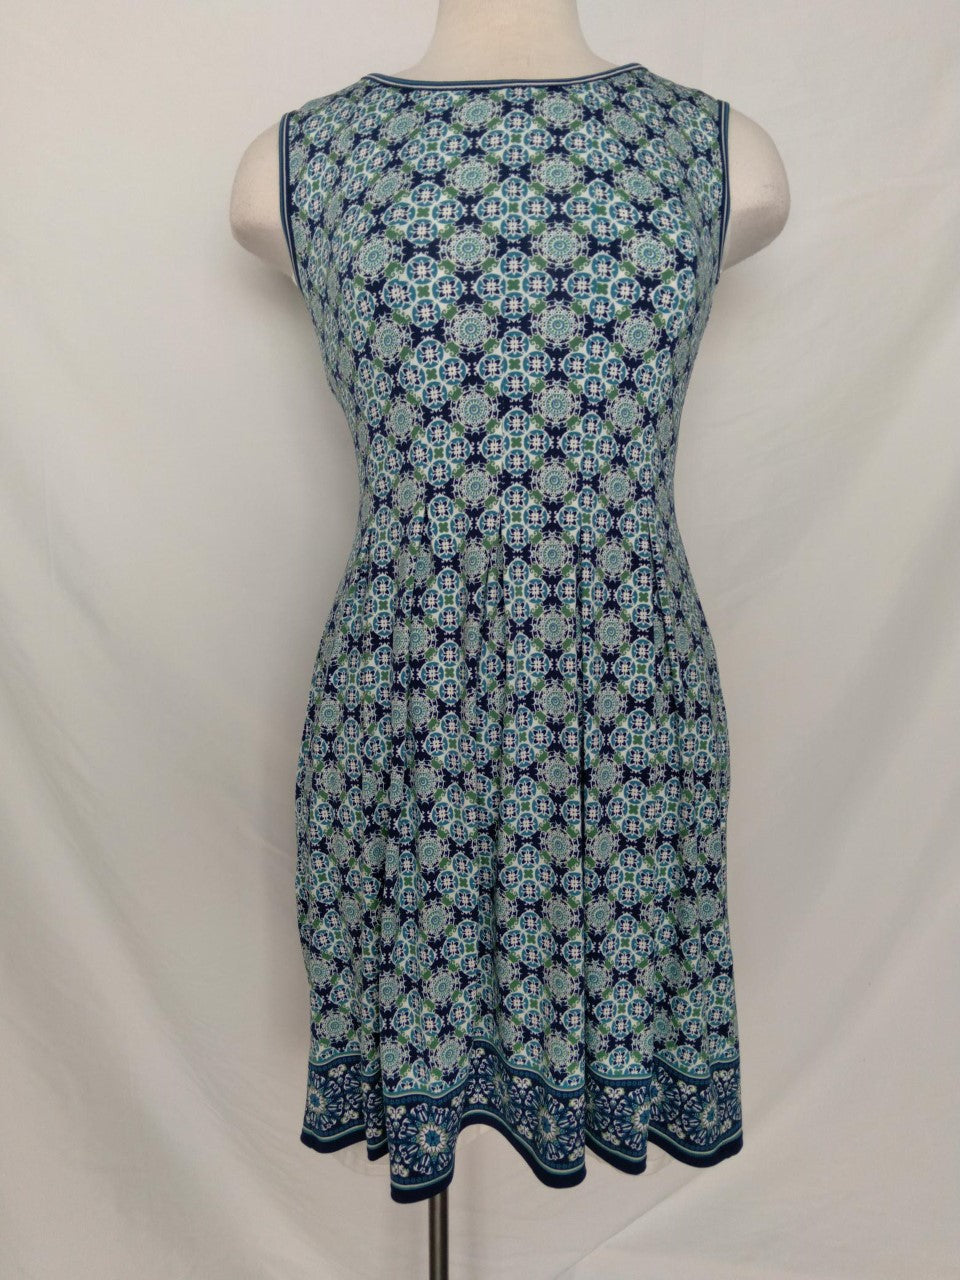 NWT - Max Studio blue print Sleeveless Dress - S